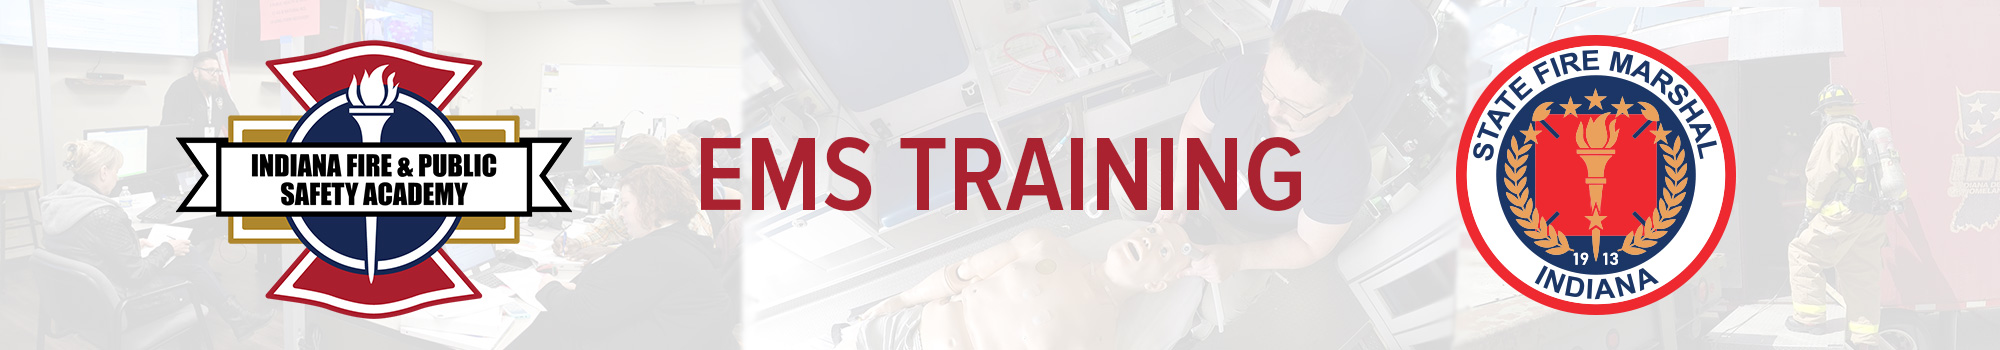 Academy EMS Training banner